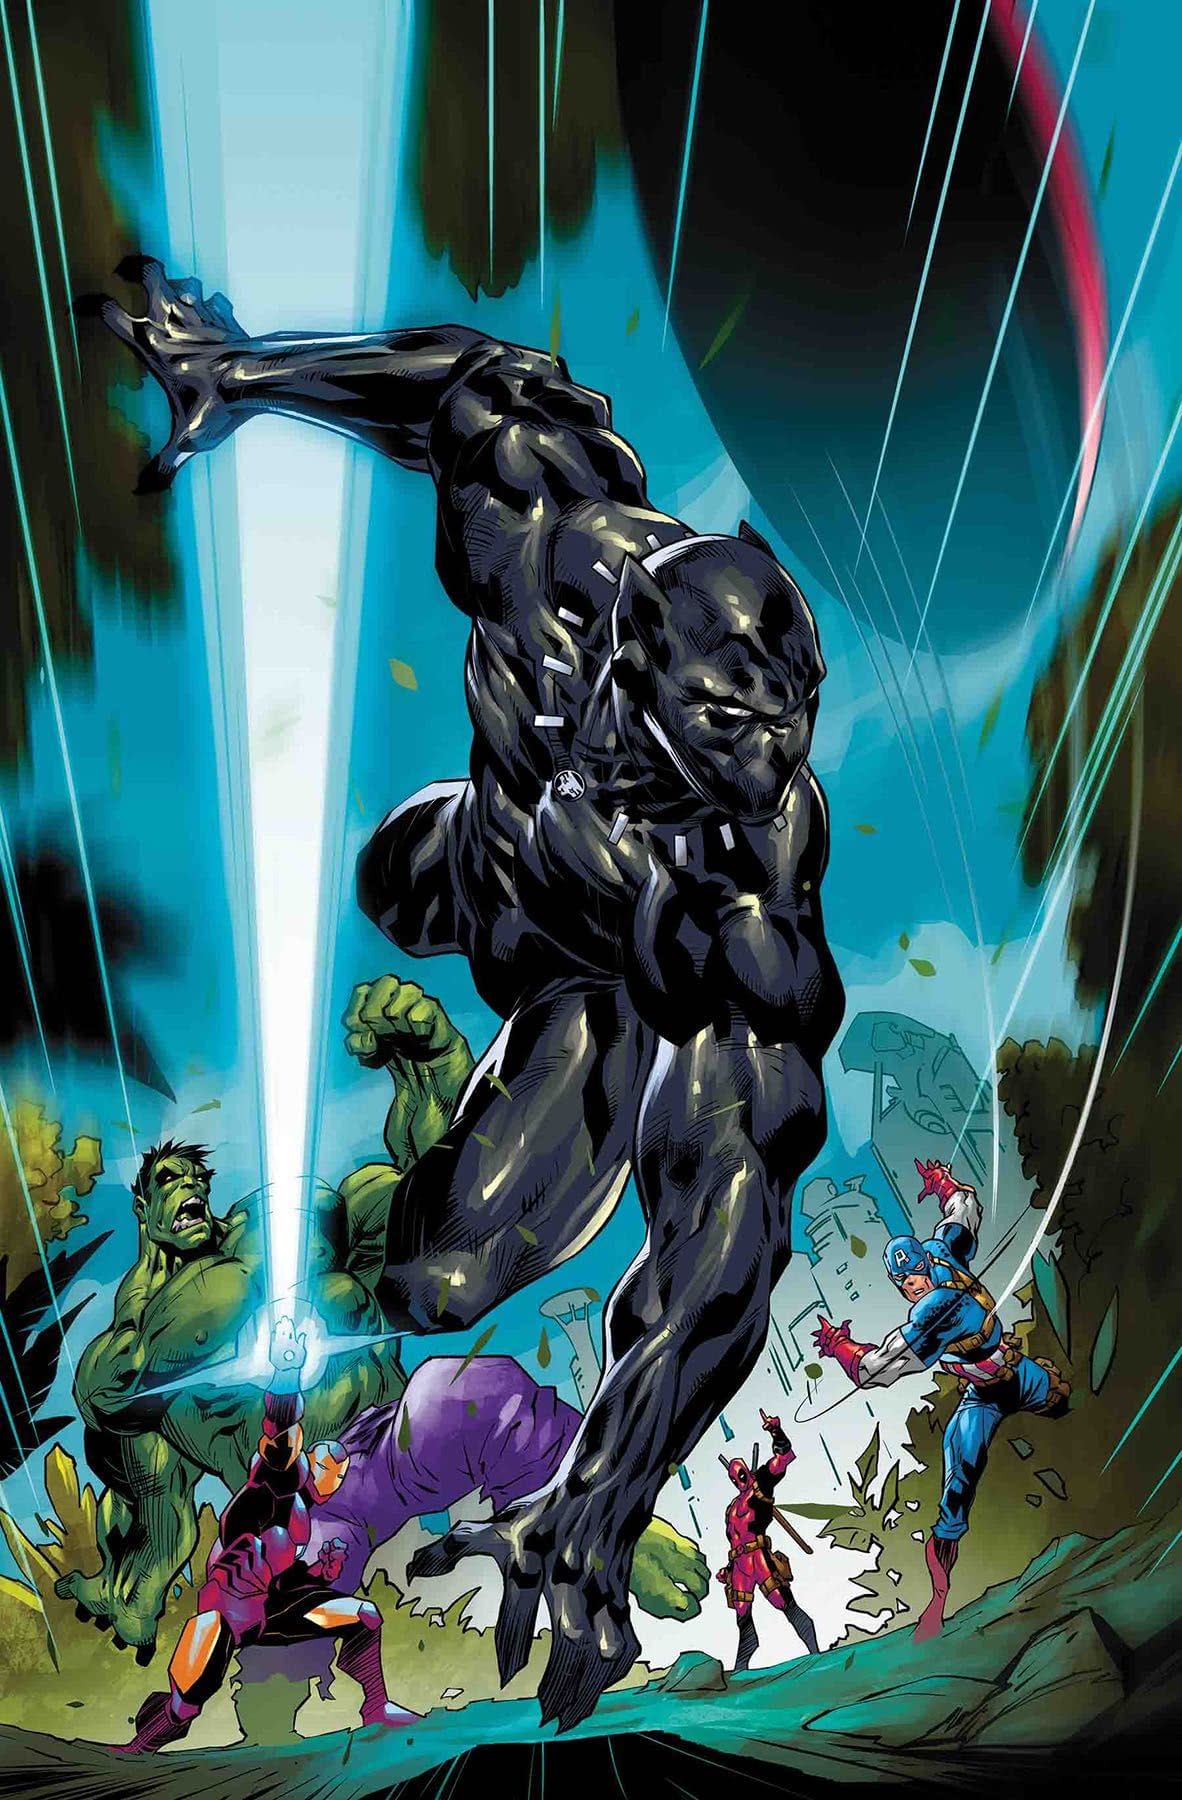 Next Week's Black Panther vs. Deadpool #2 Takes on the Poaching Economy